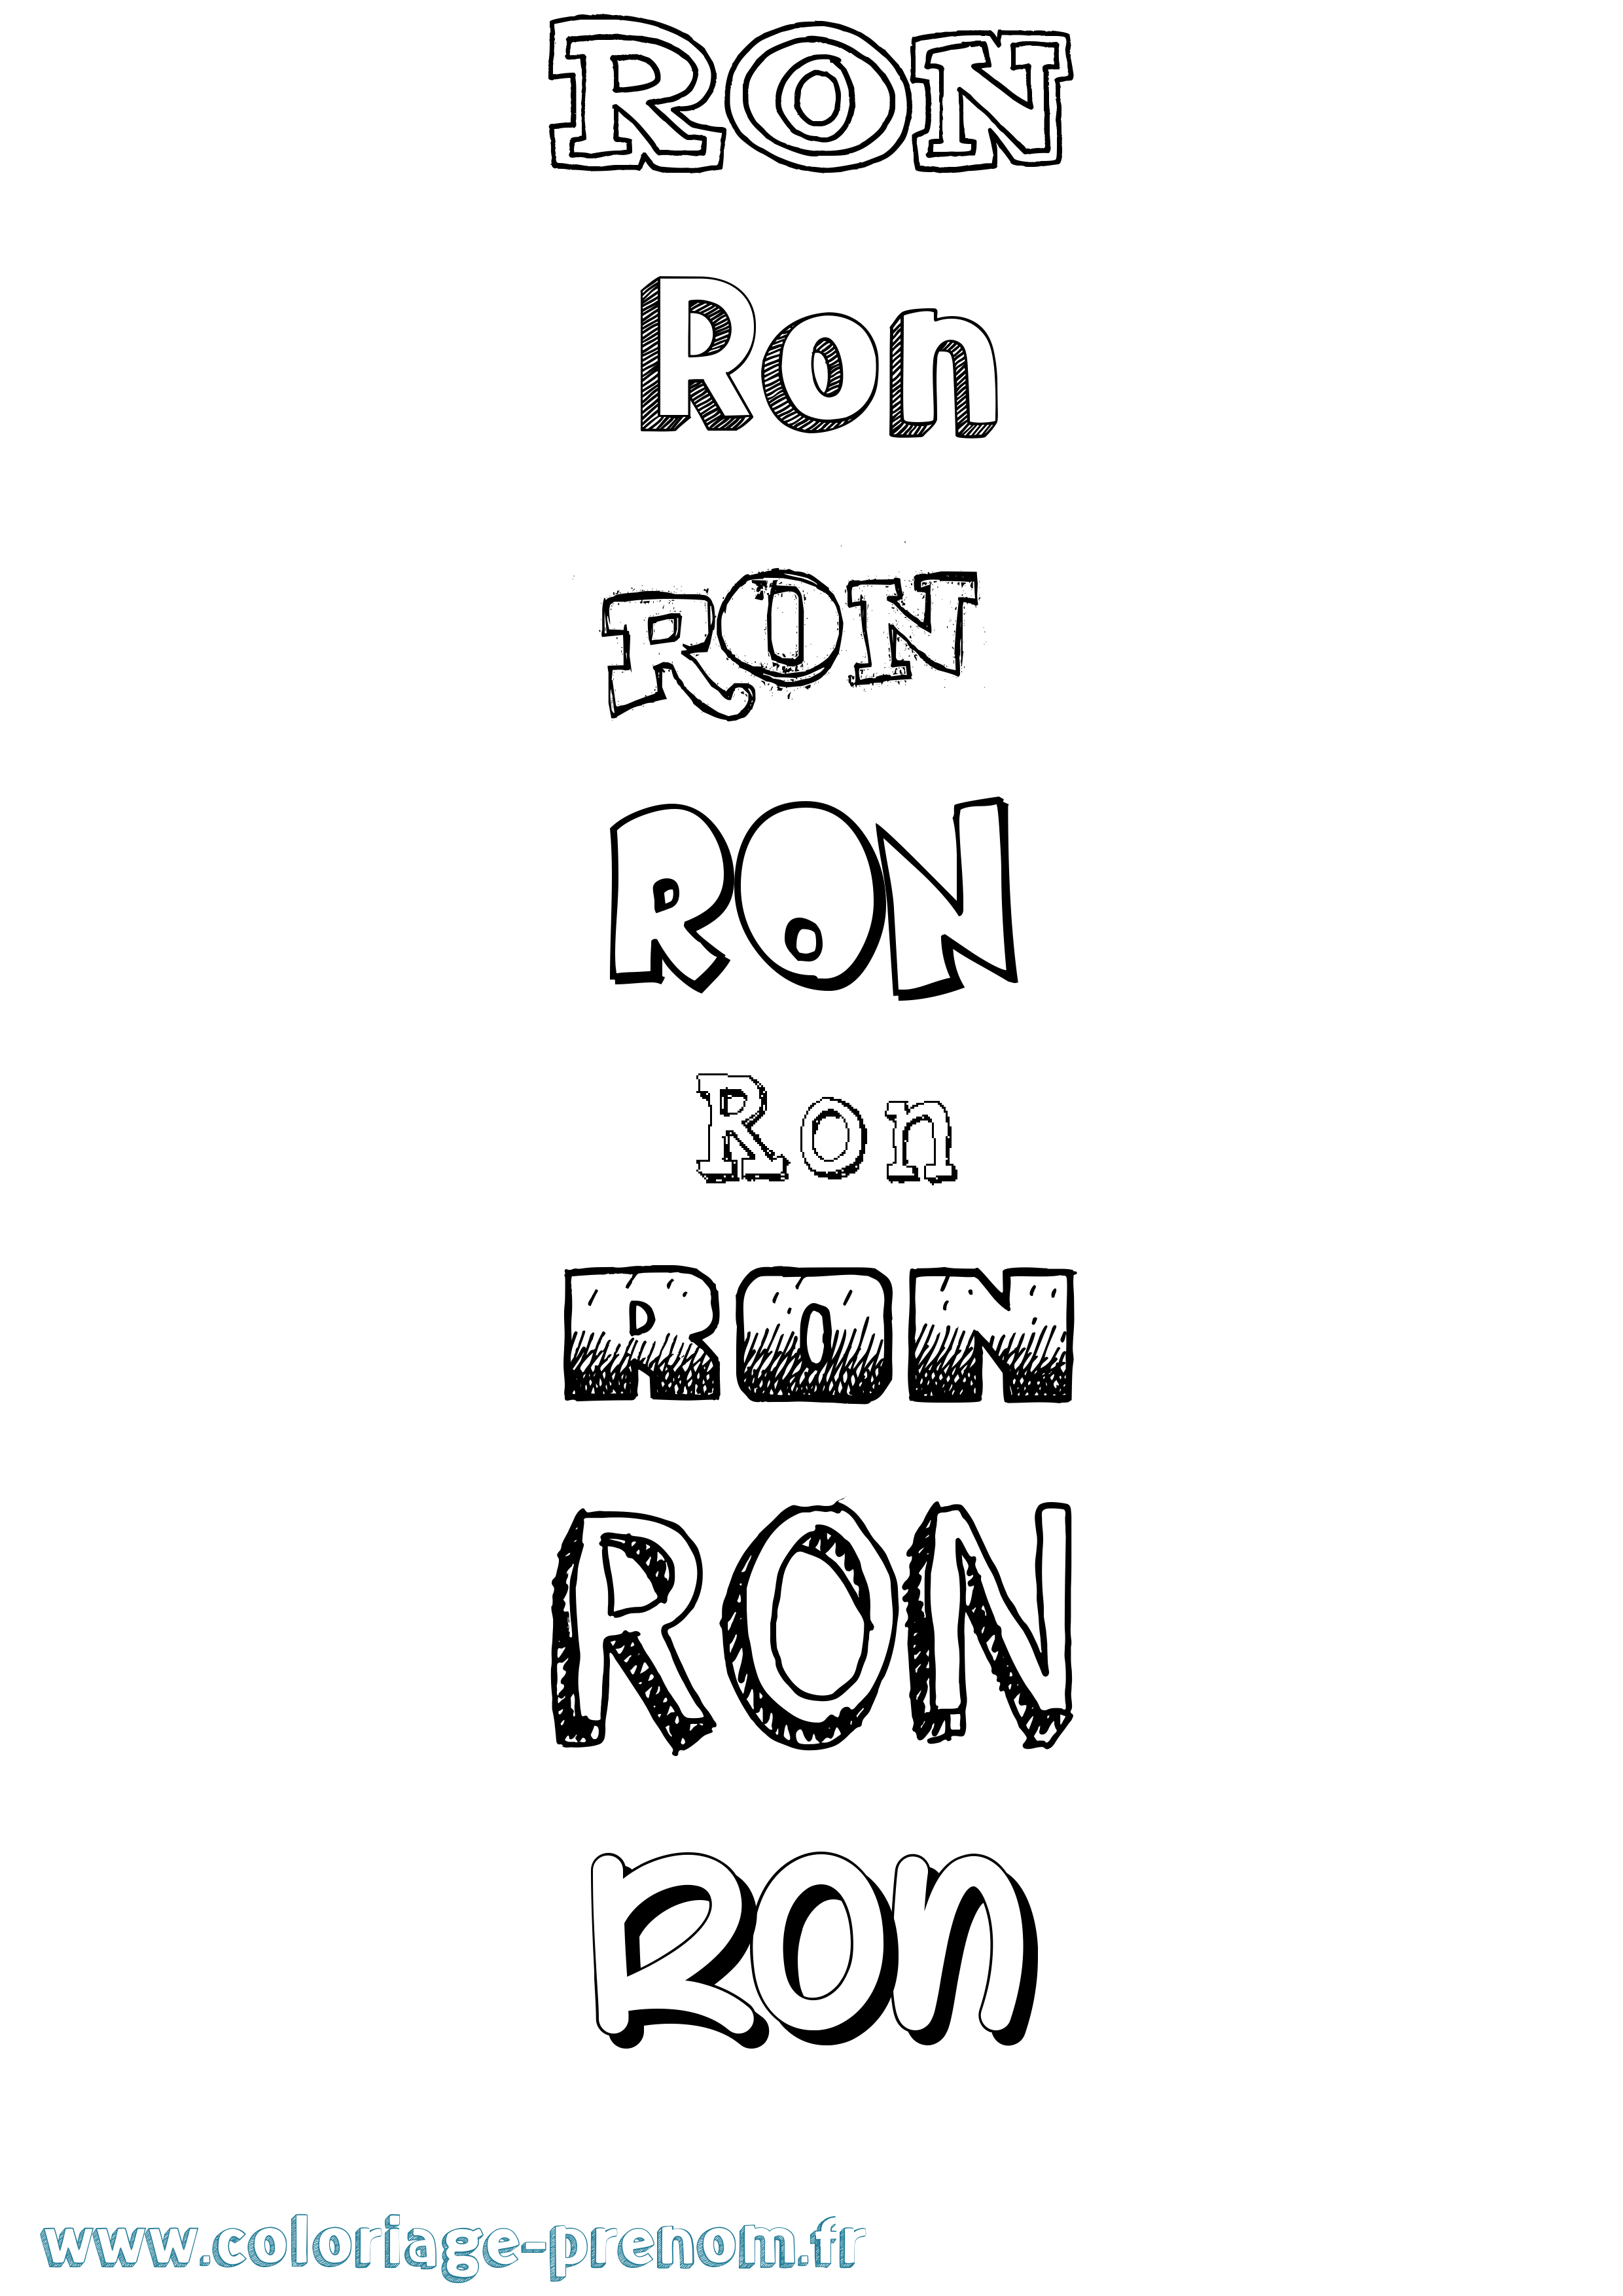 Coloriage prénom Ron